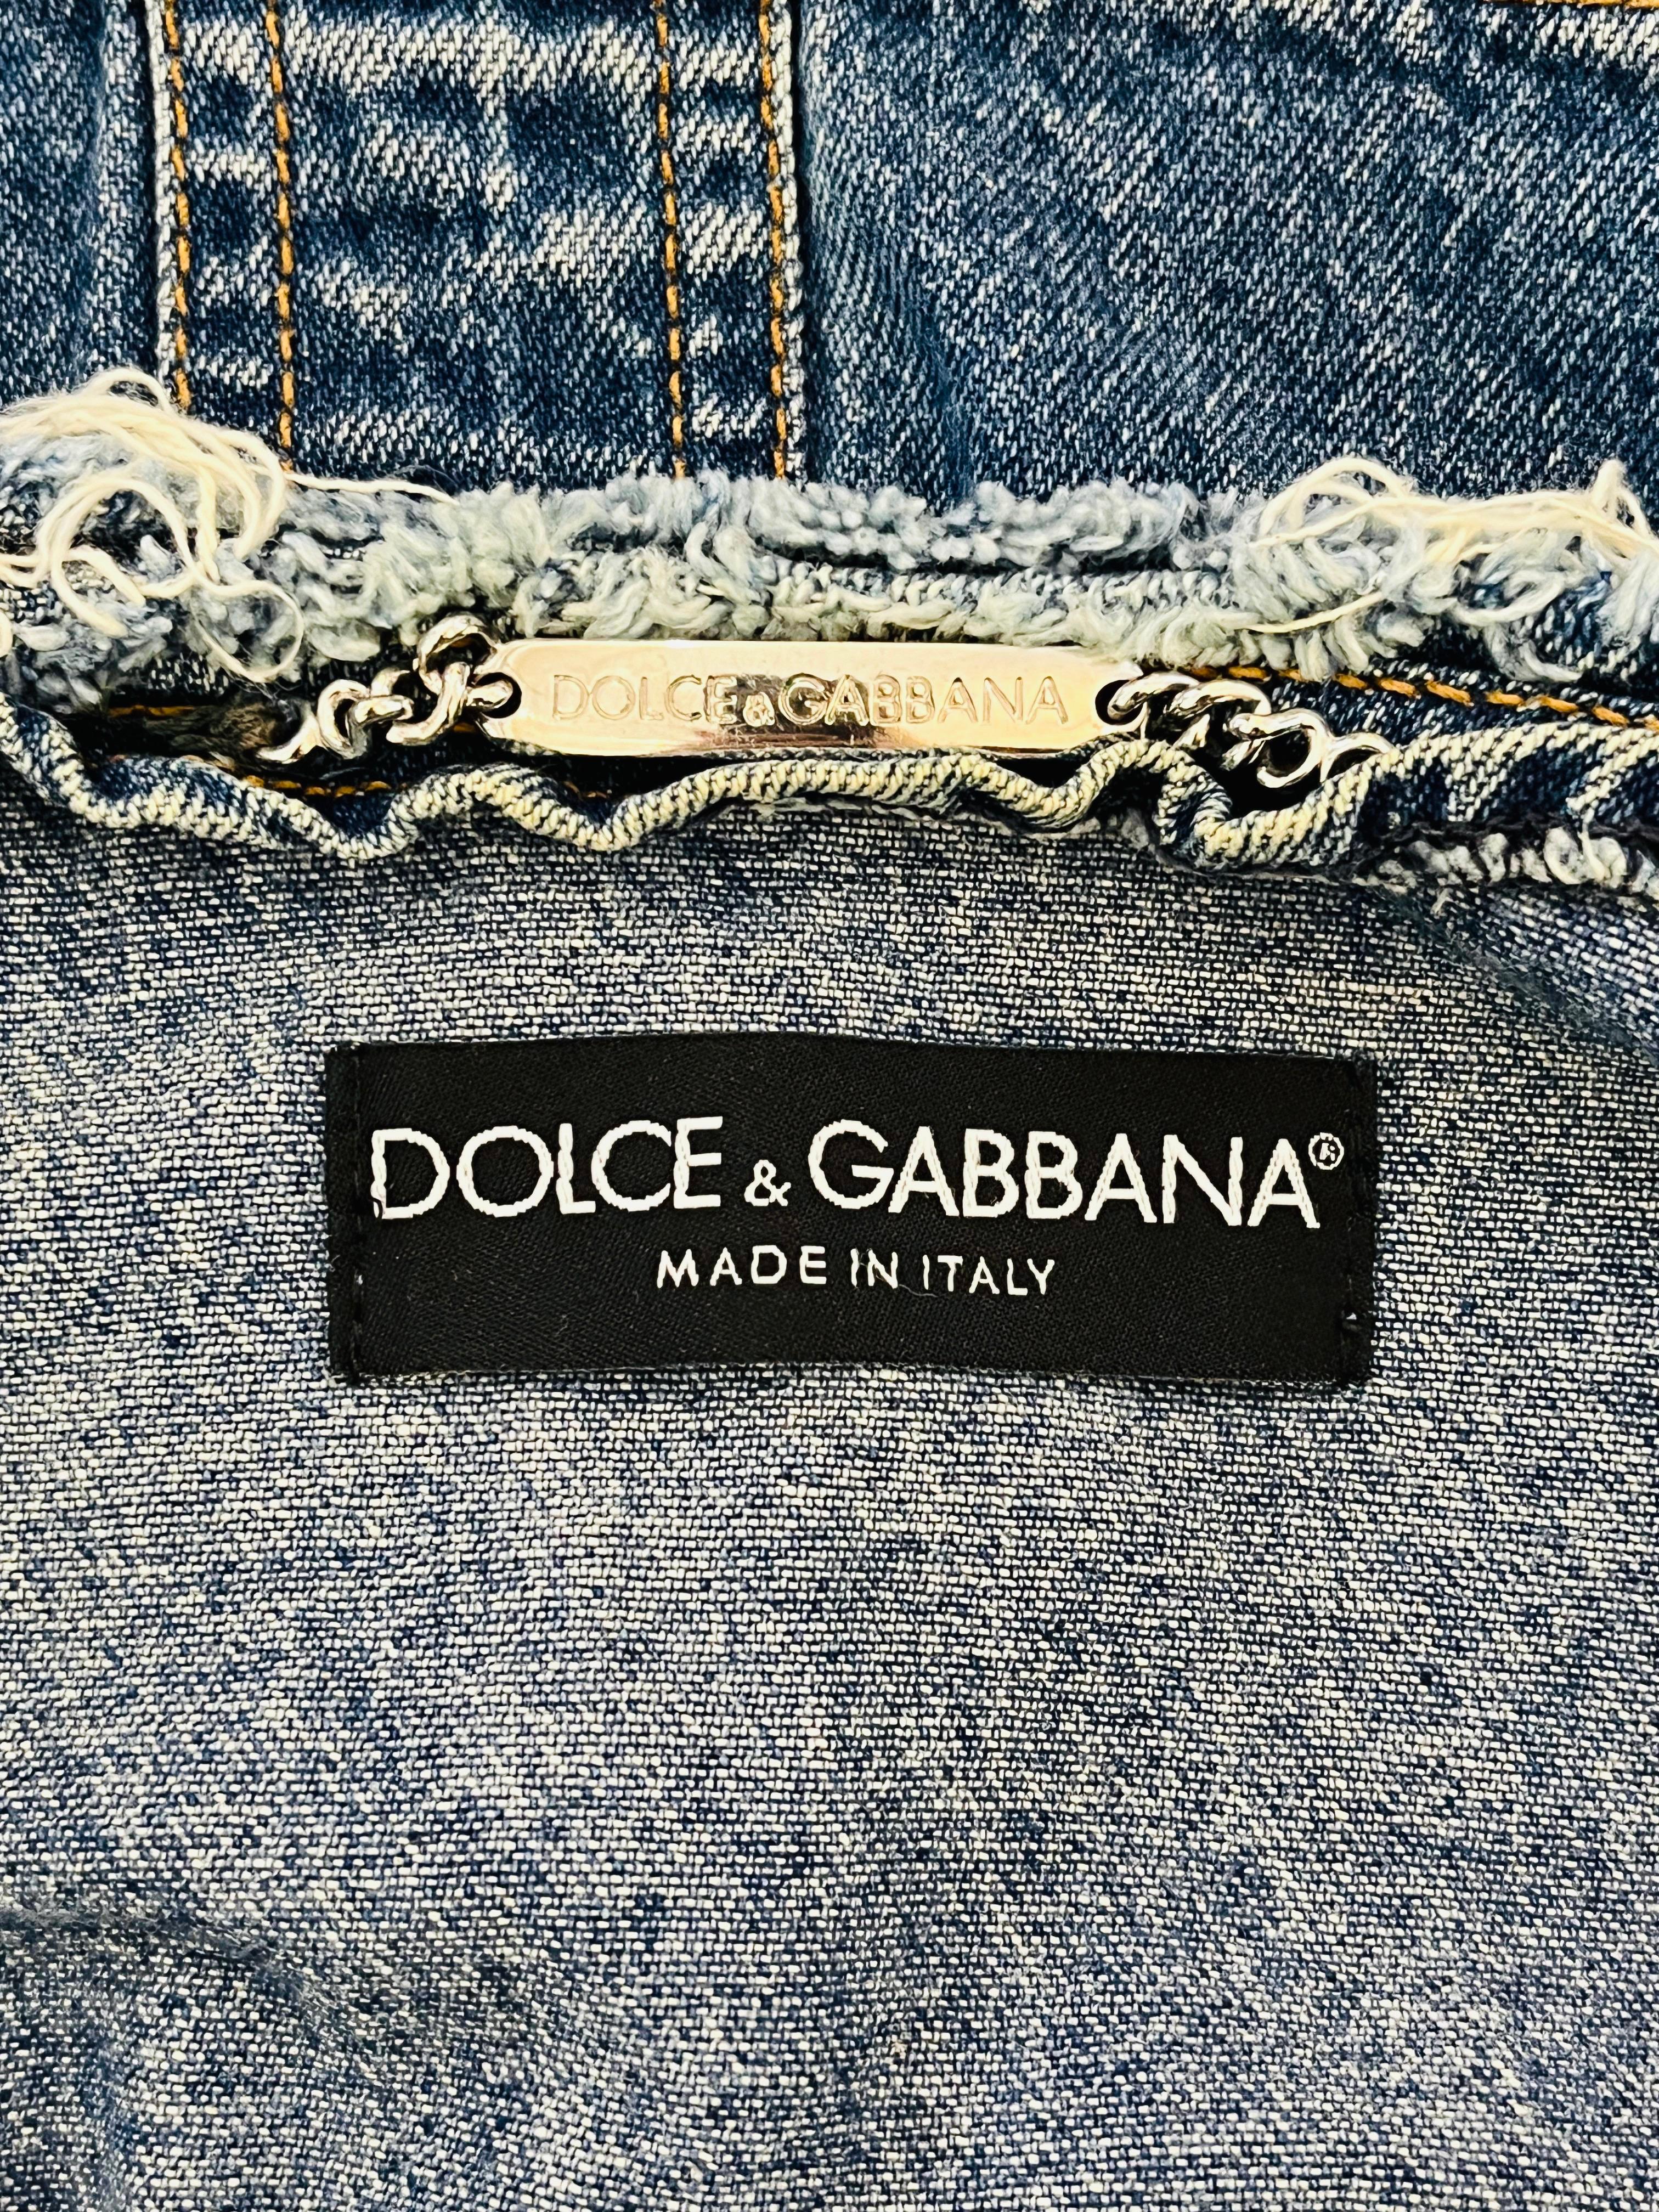 Dolce & Gabbana Denim Jacket. For Sale 2